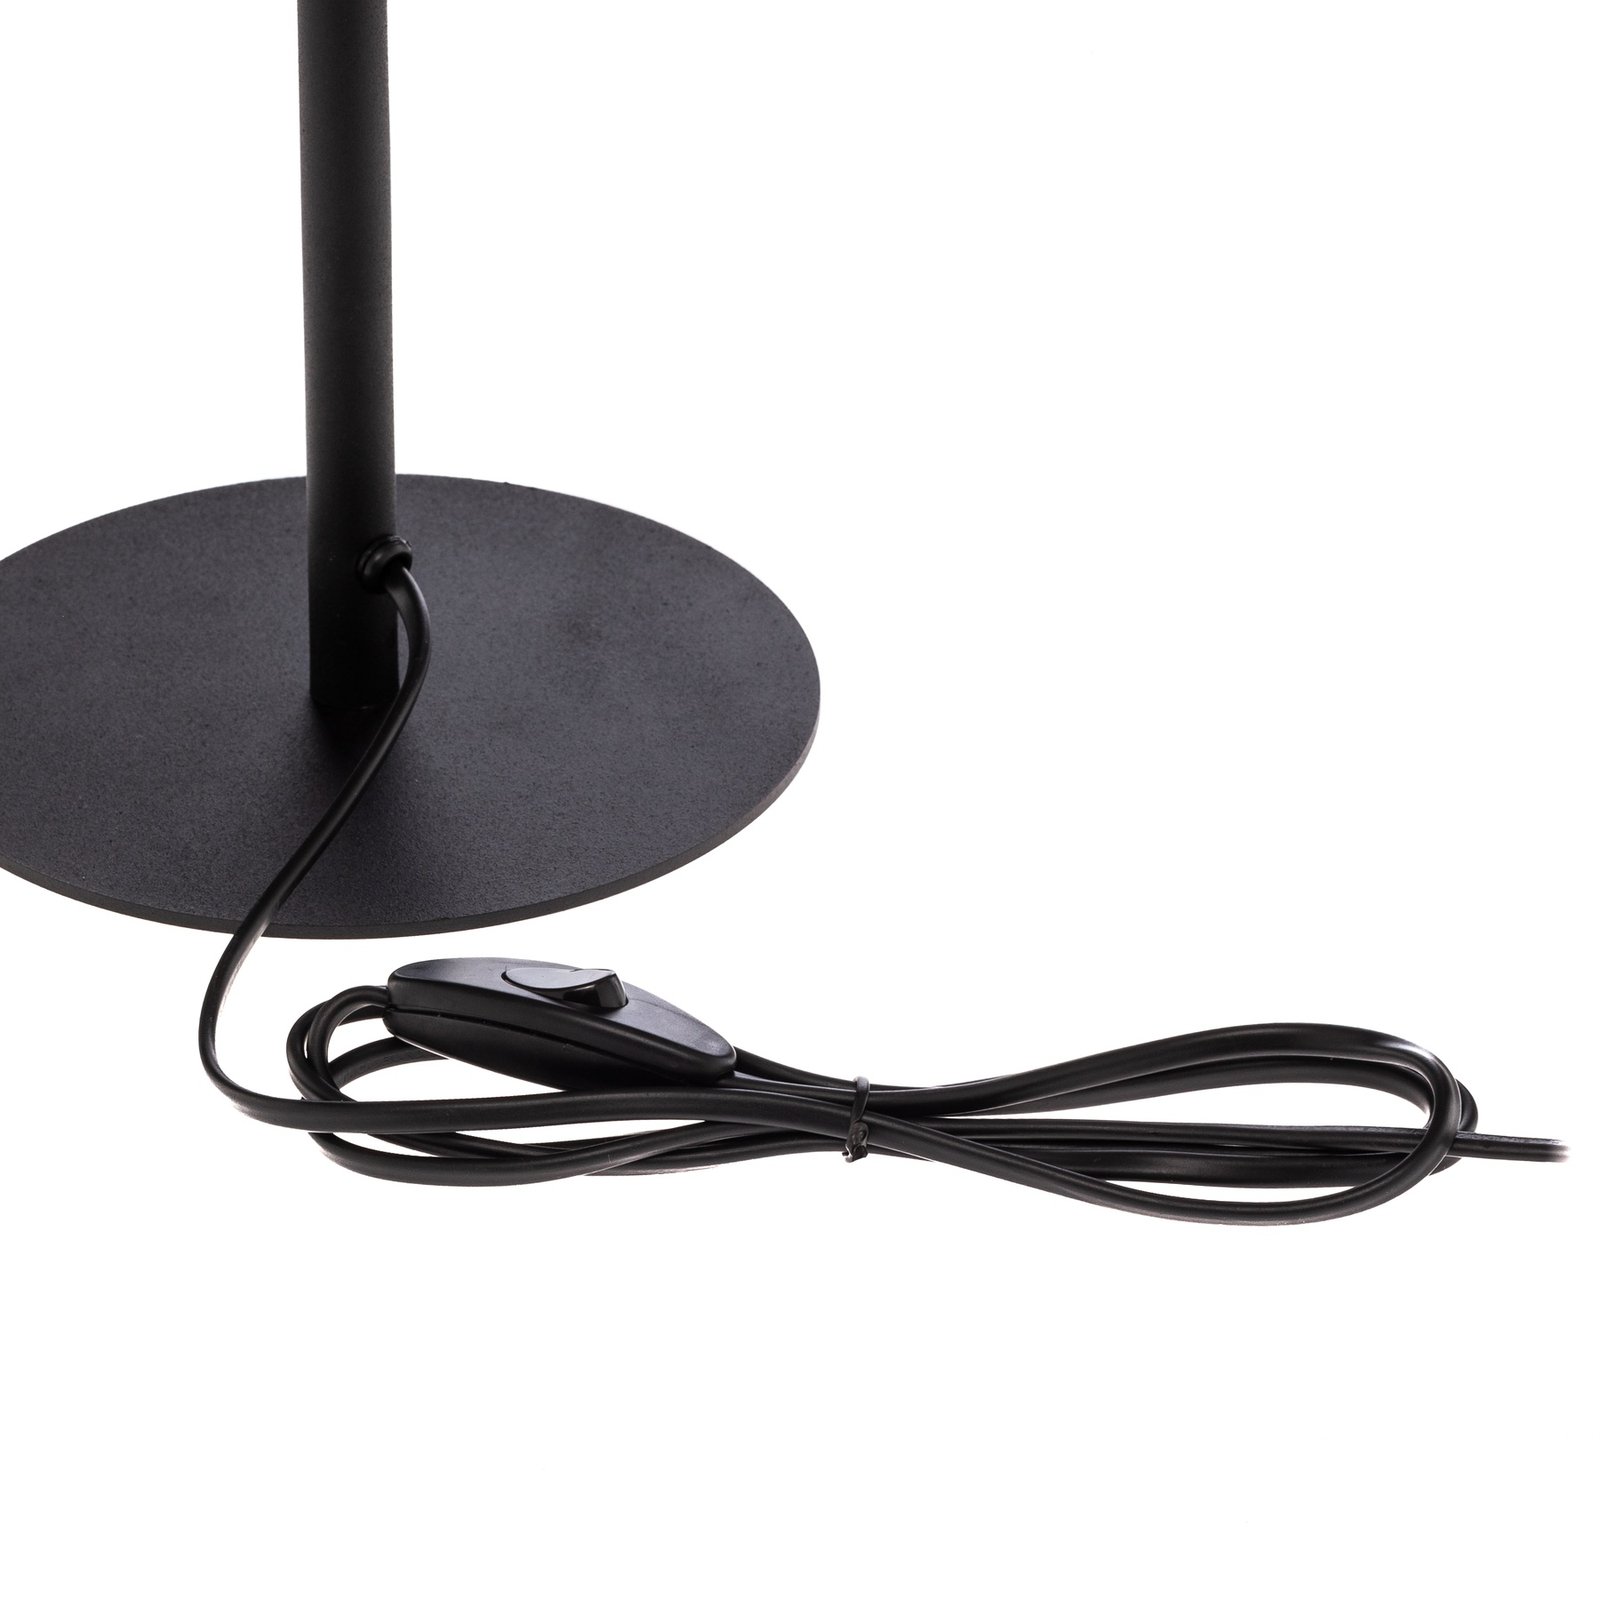 Calisto table lamp, Jute, natural brown, height 38 cm